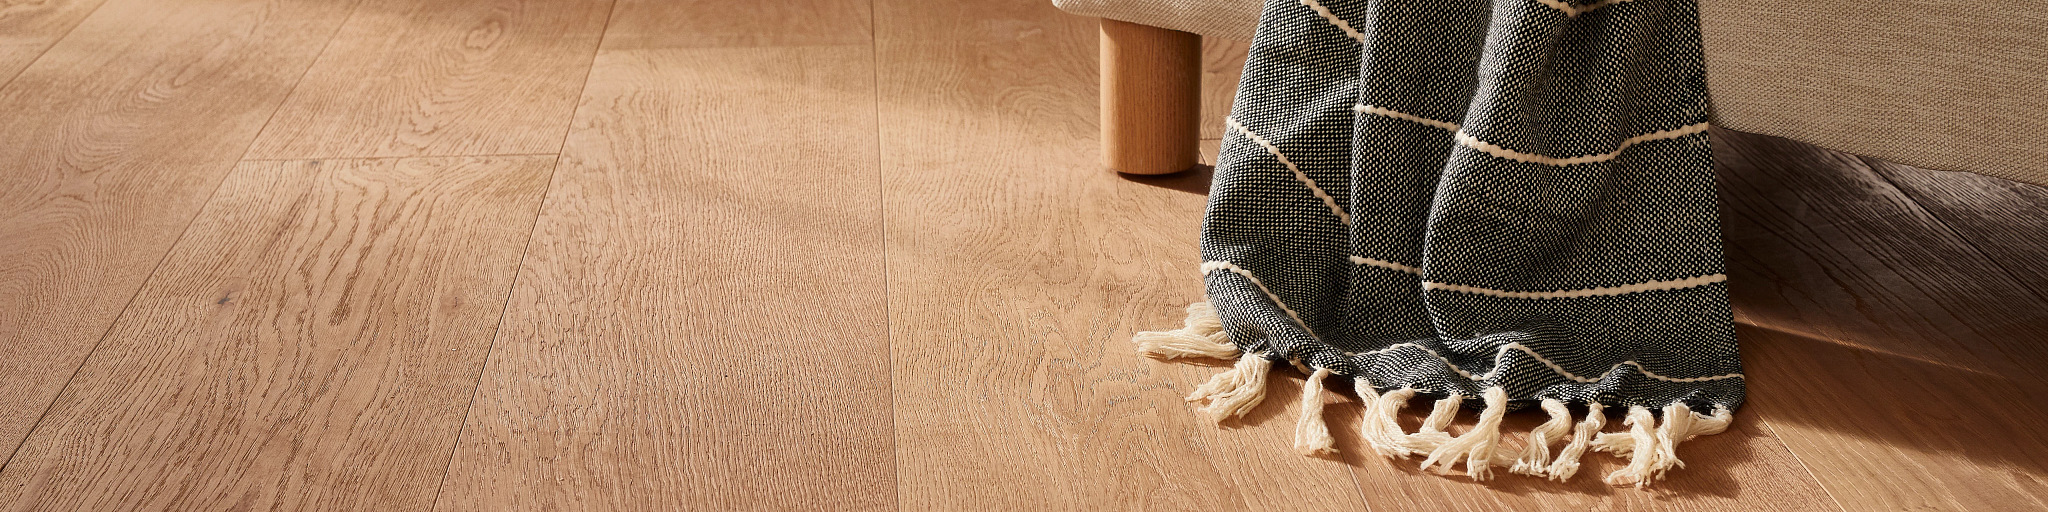 50  Hardwood flooring company in modesto with Simple Decor